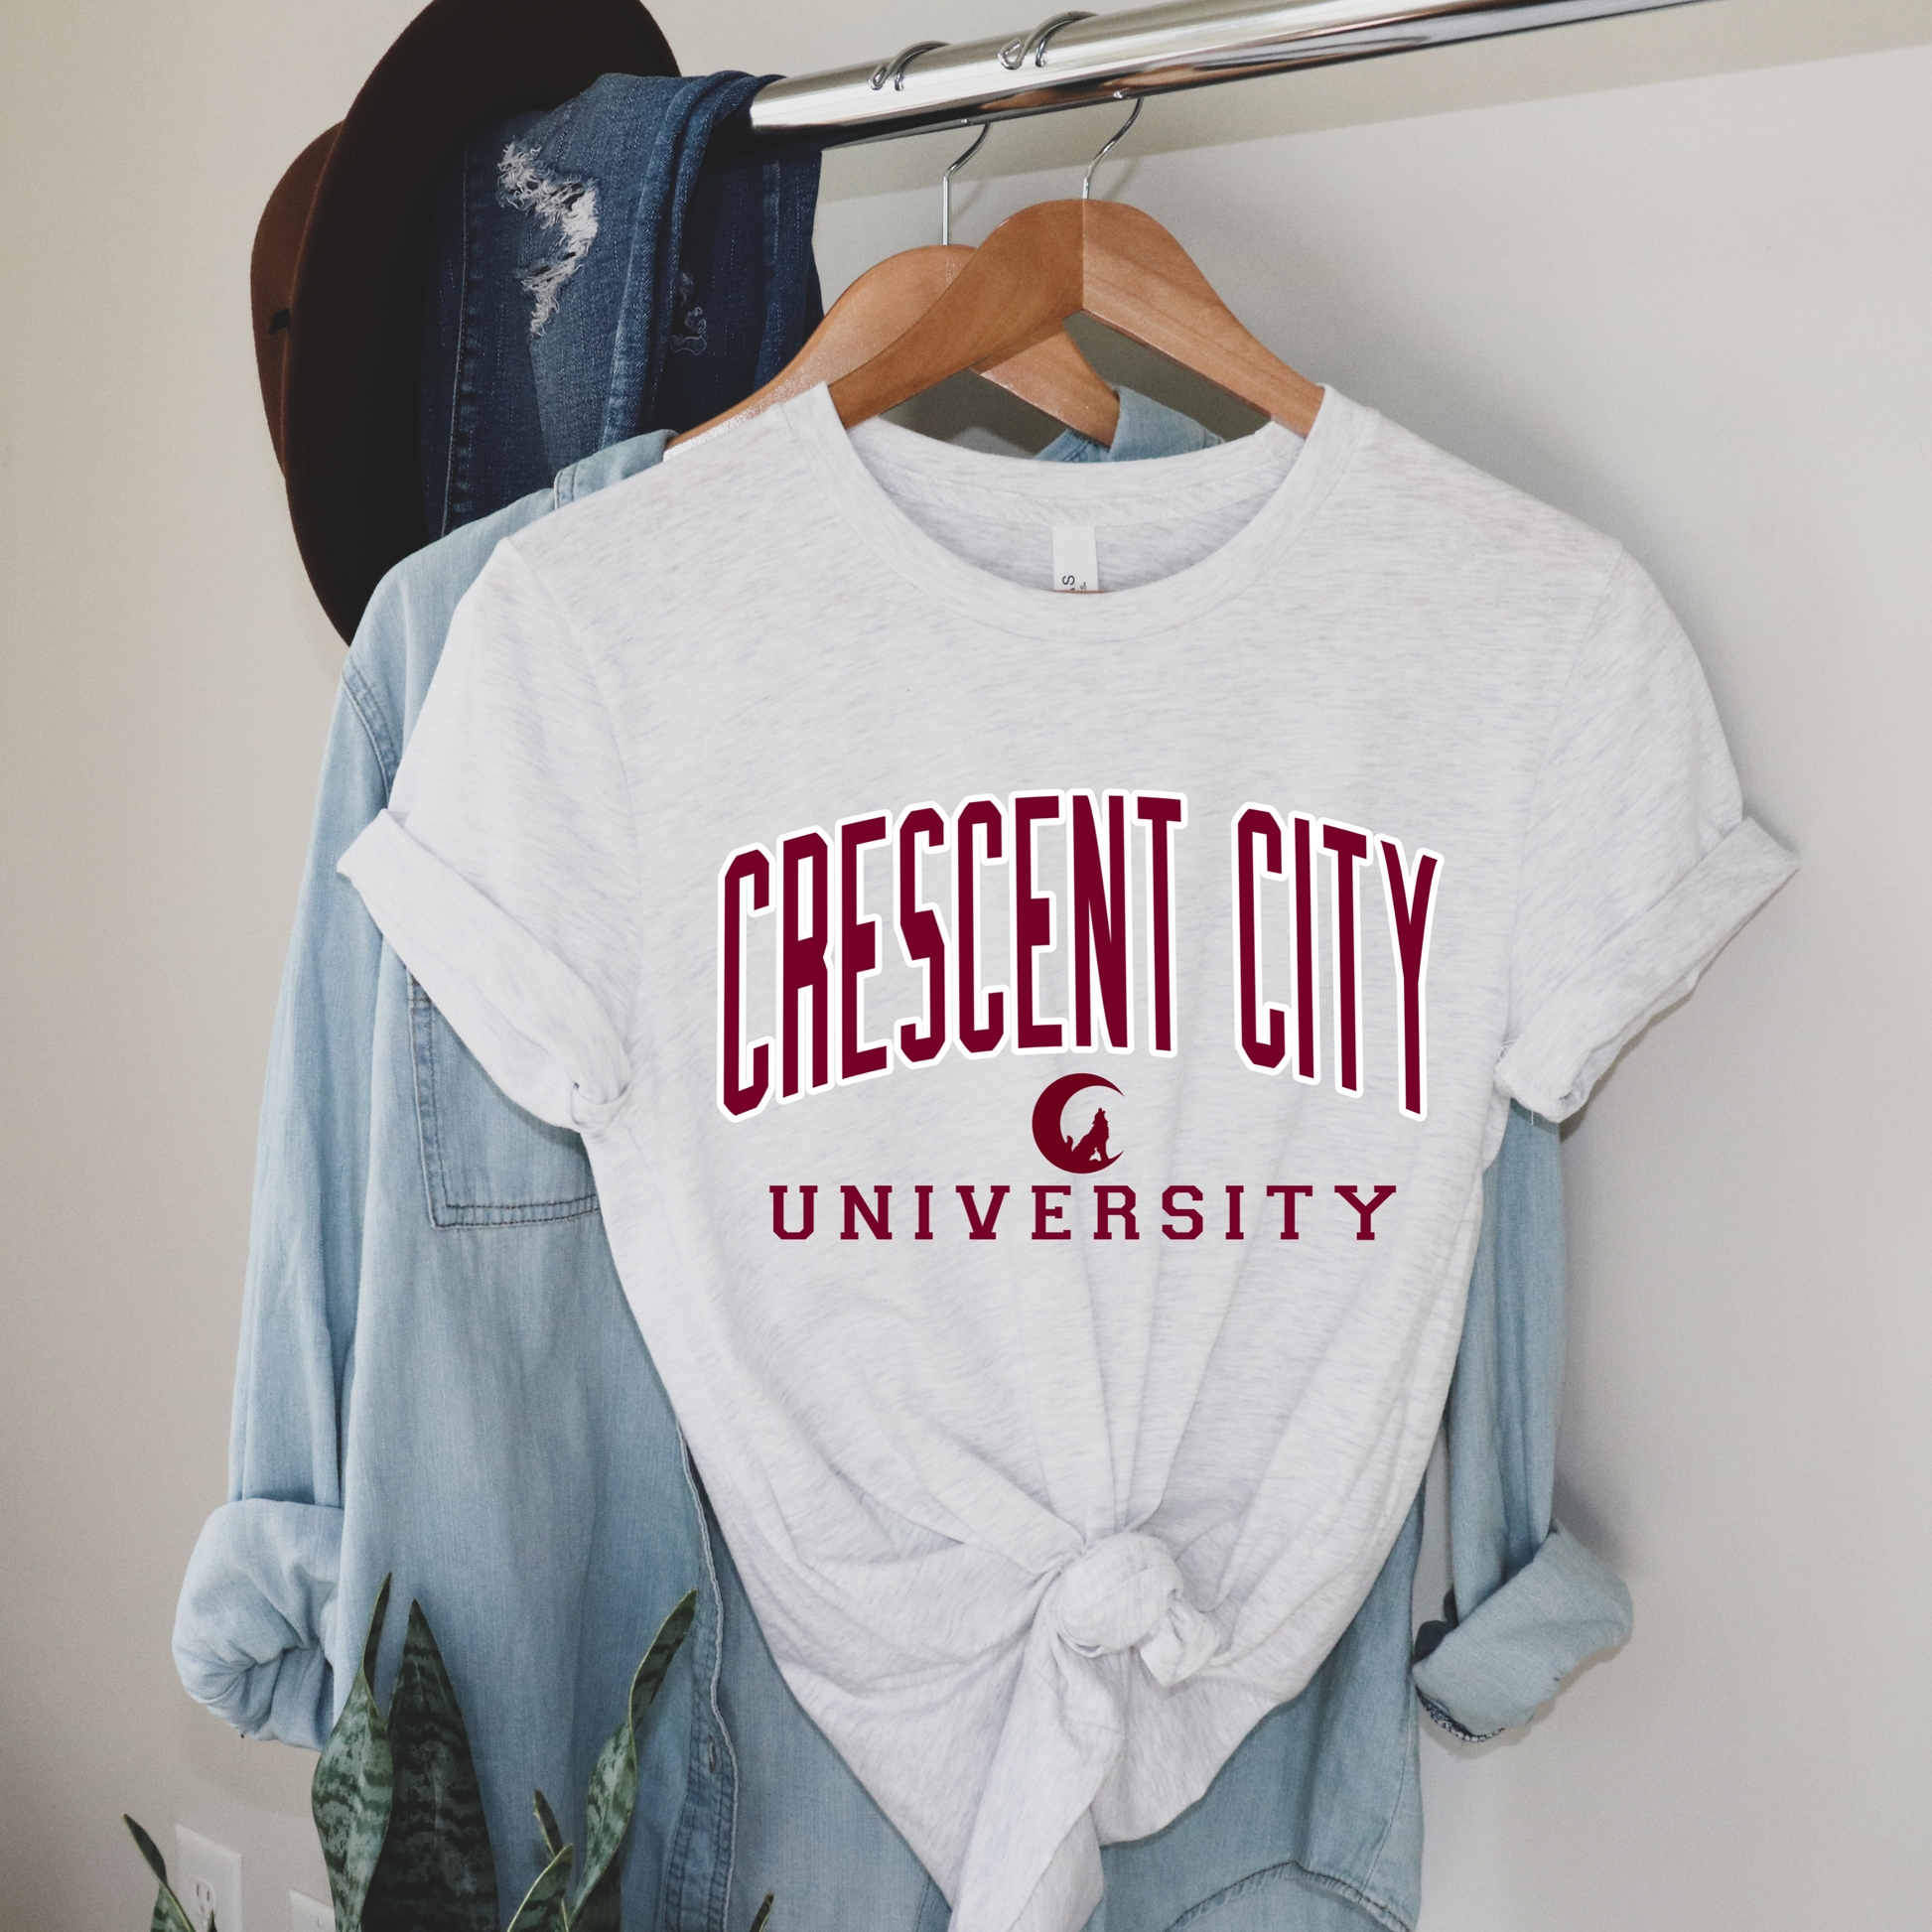 Crescent City University